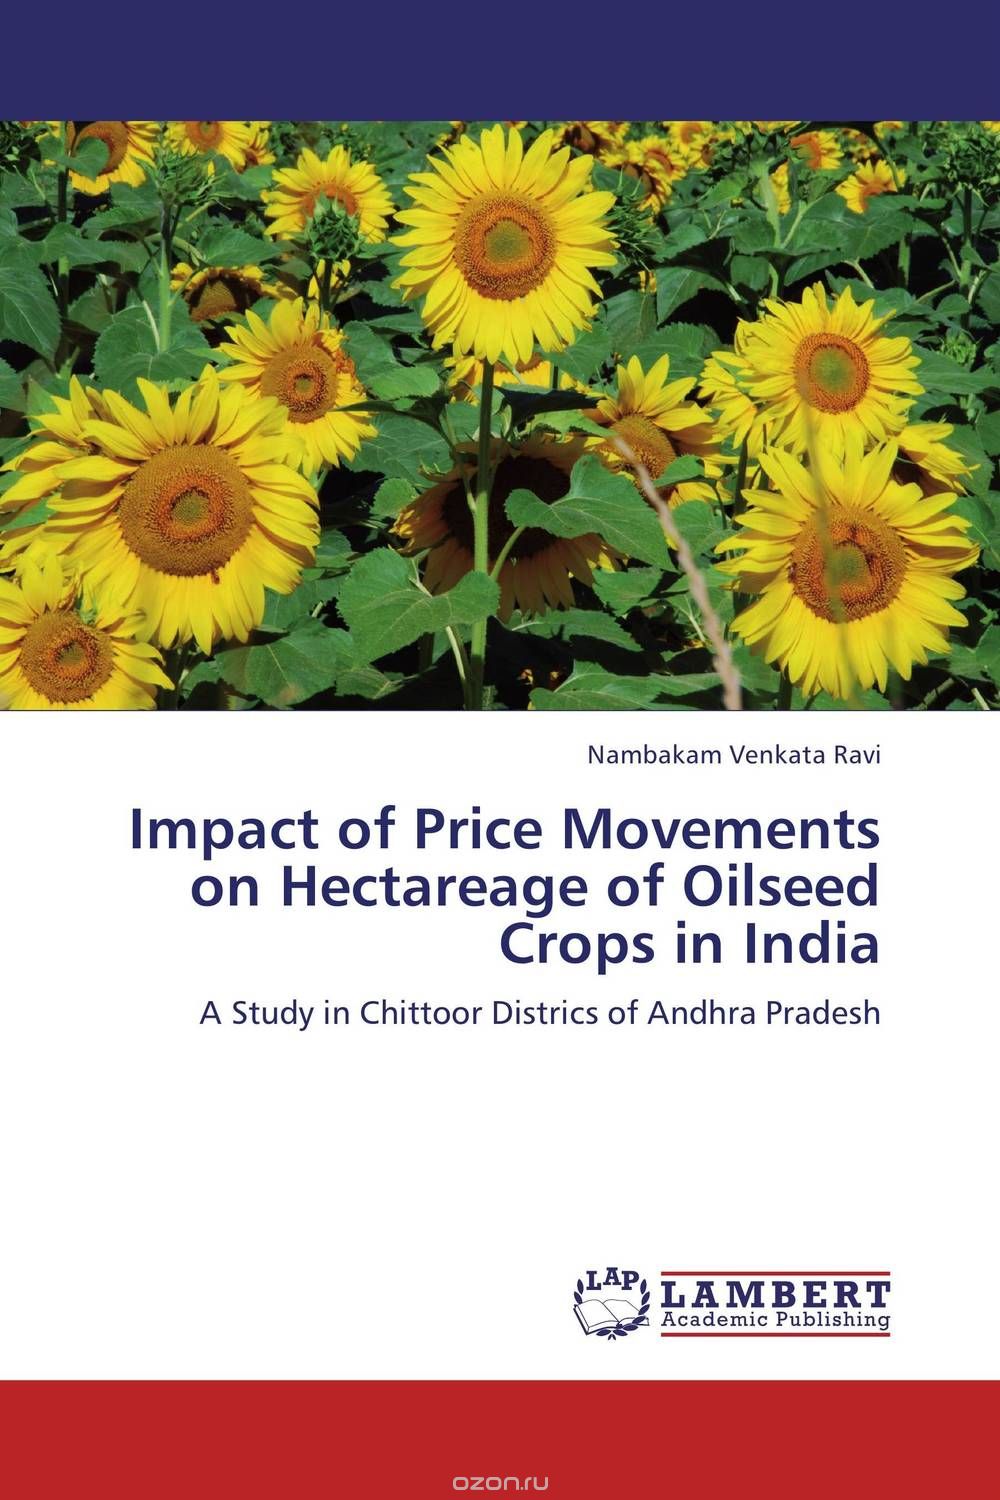 Скачать книгу "Impact of Price Movements on Hectareage of Oilseed Crops in India"